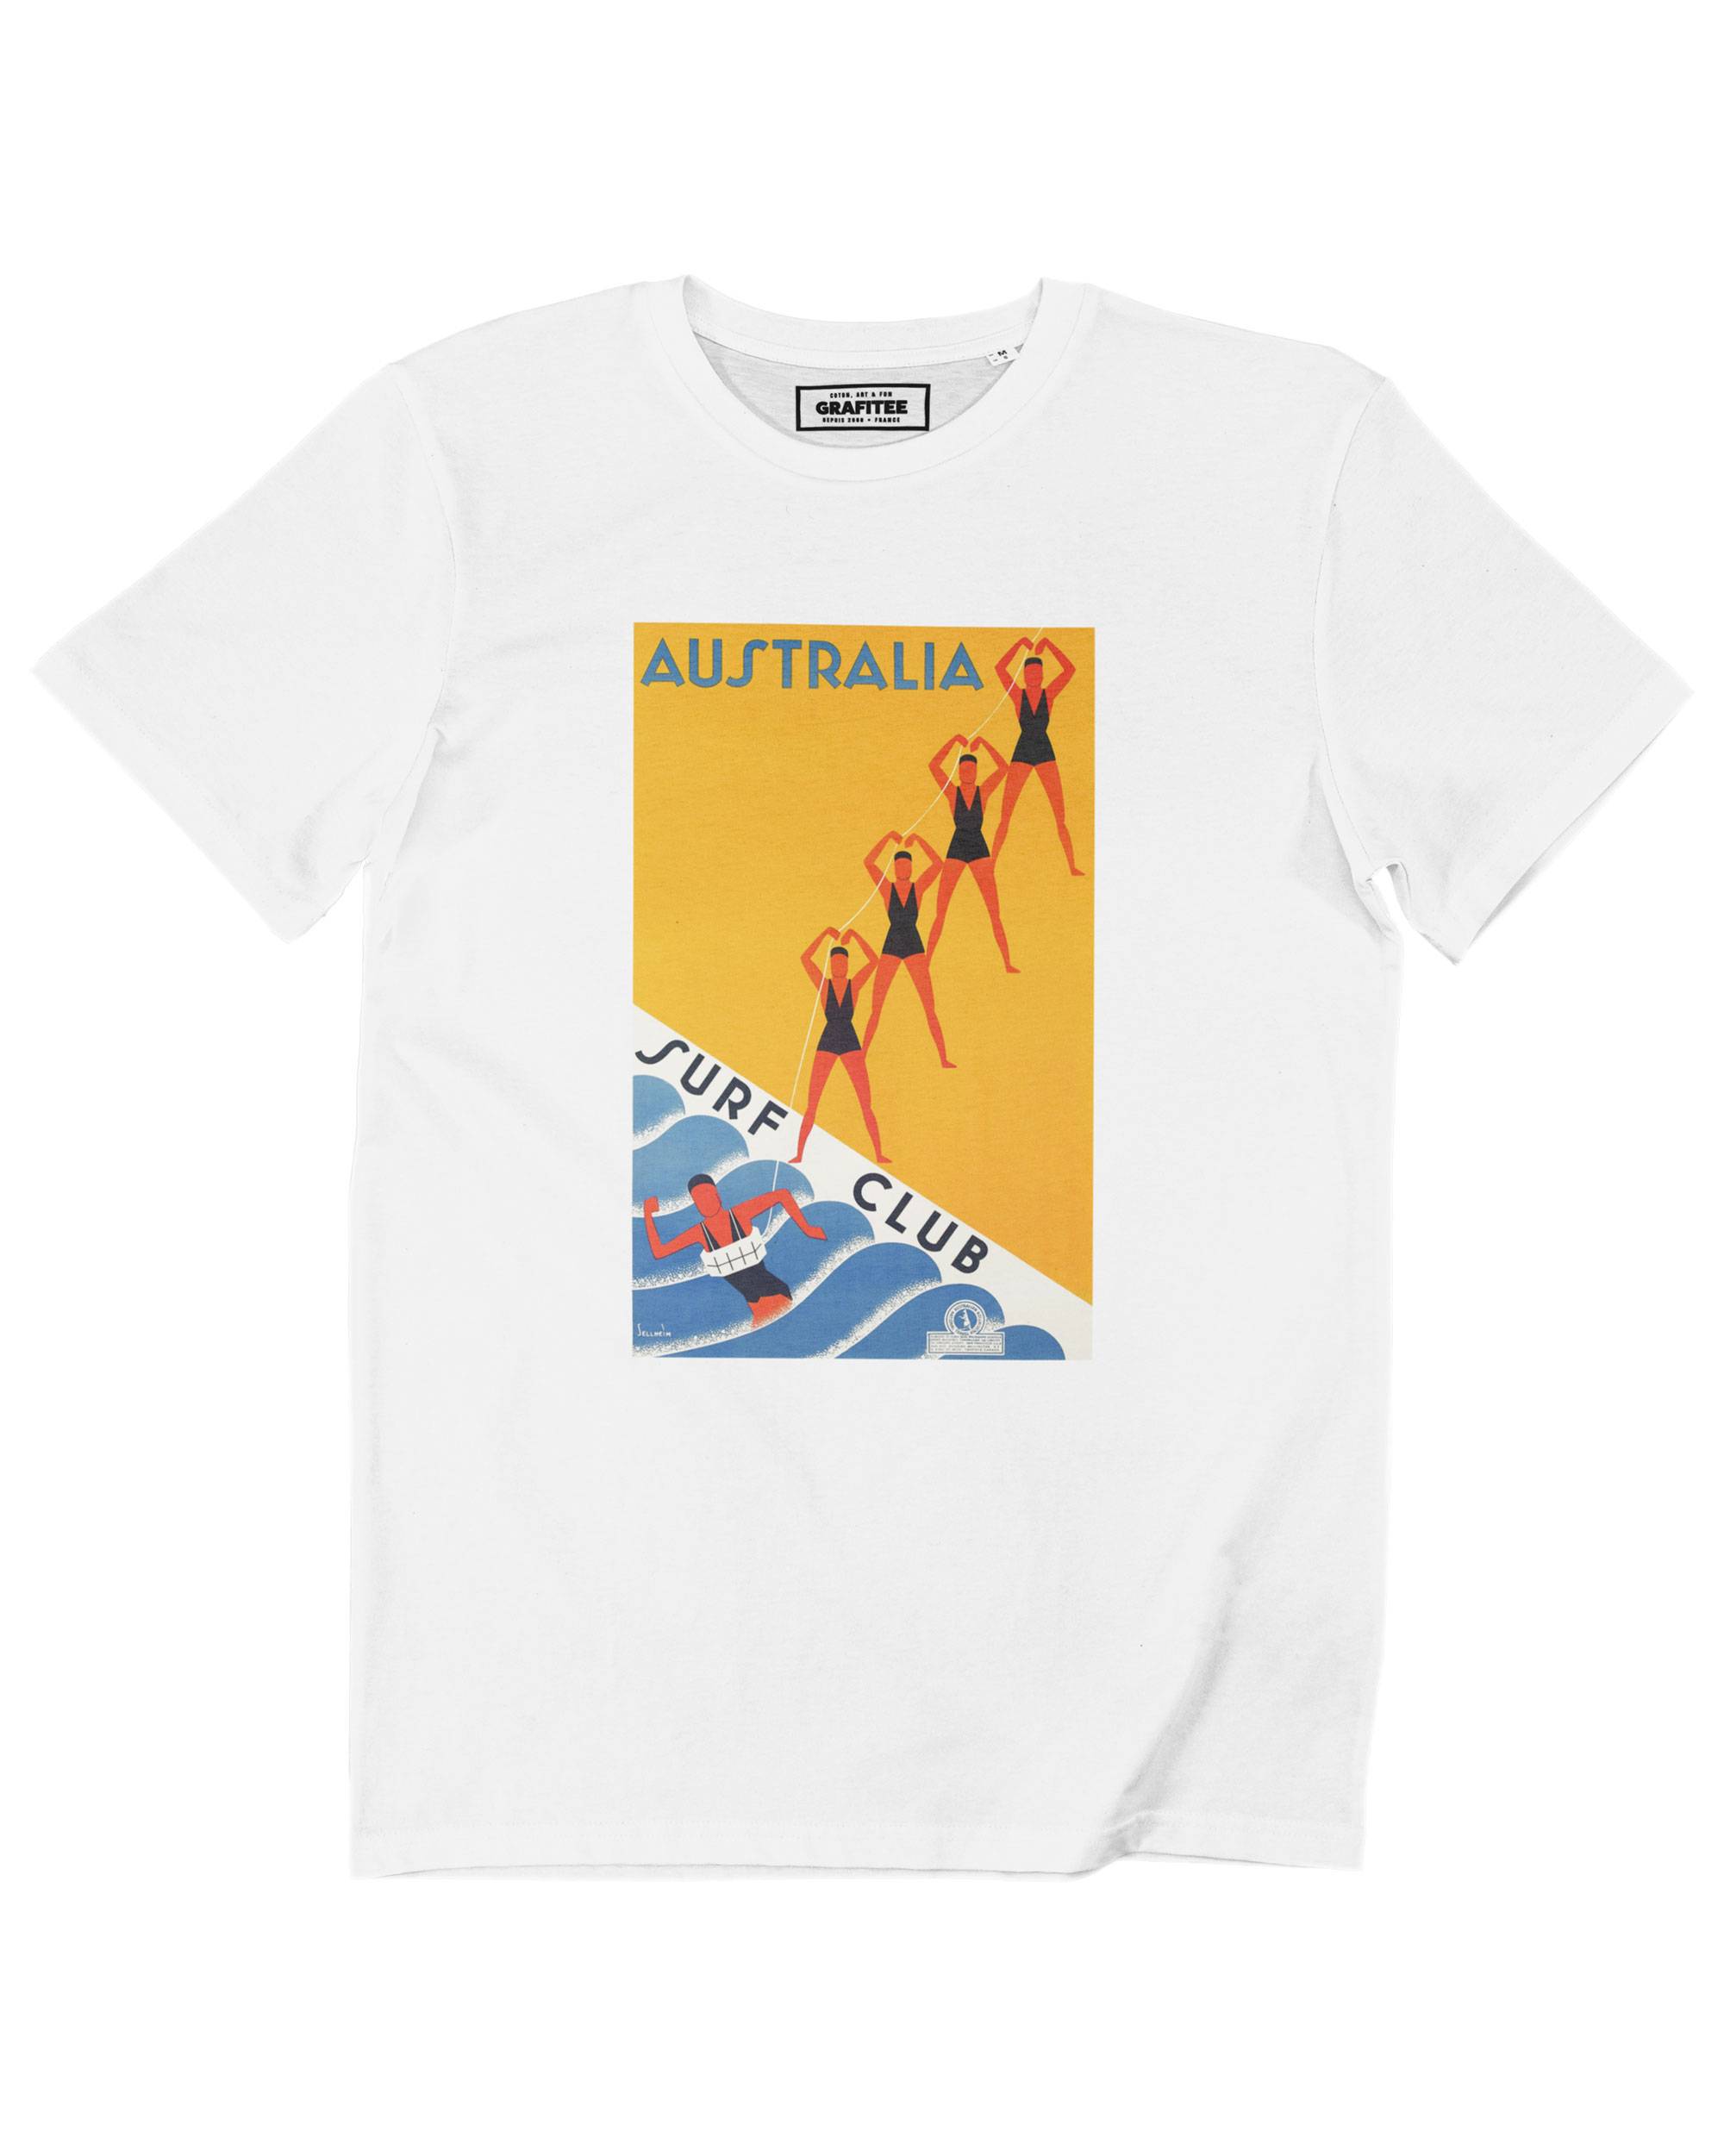 T-shirt Australia Surf Club Grafitee